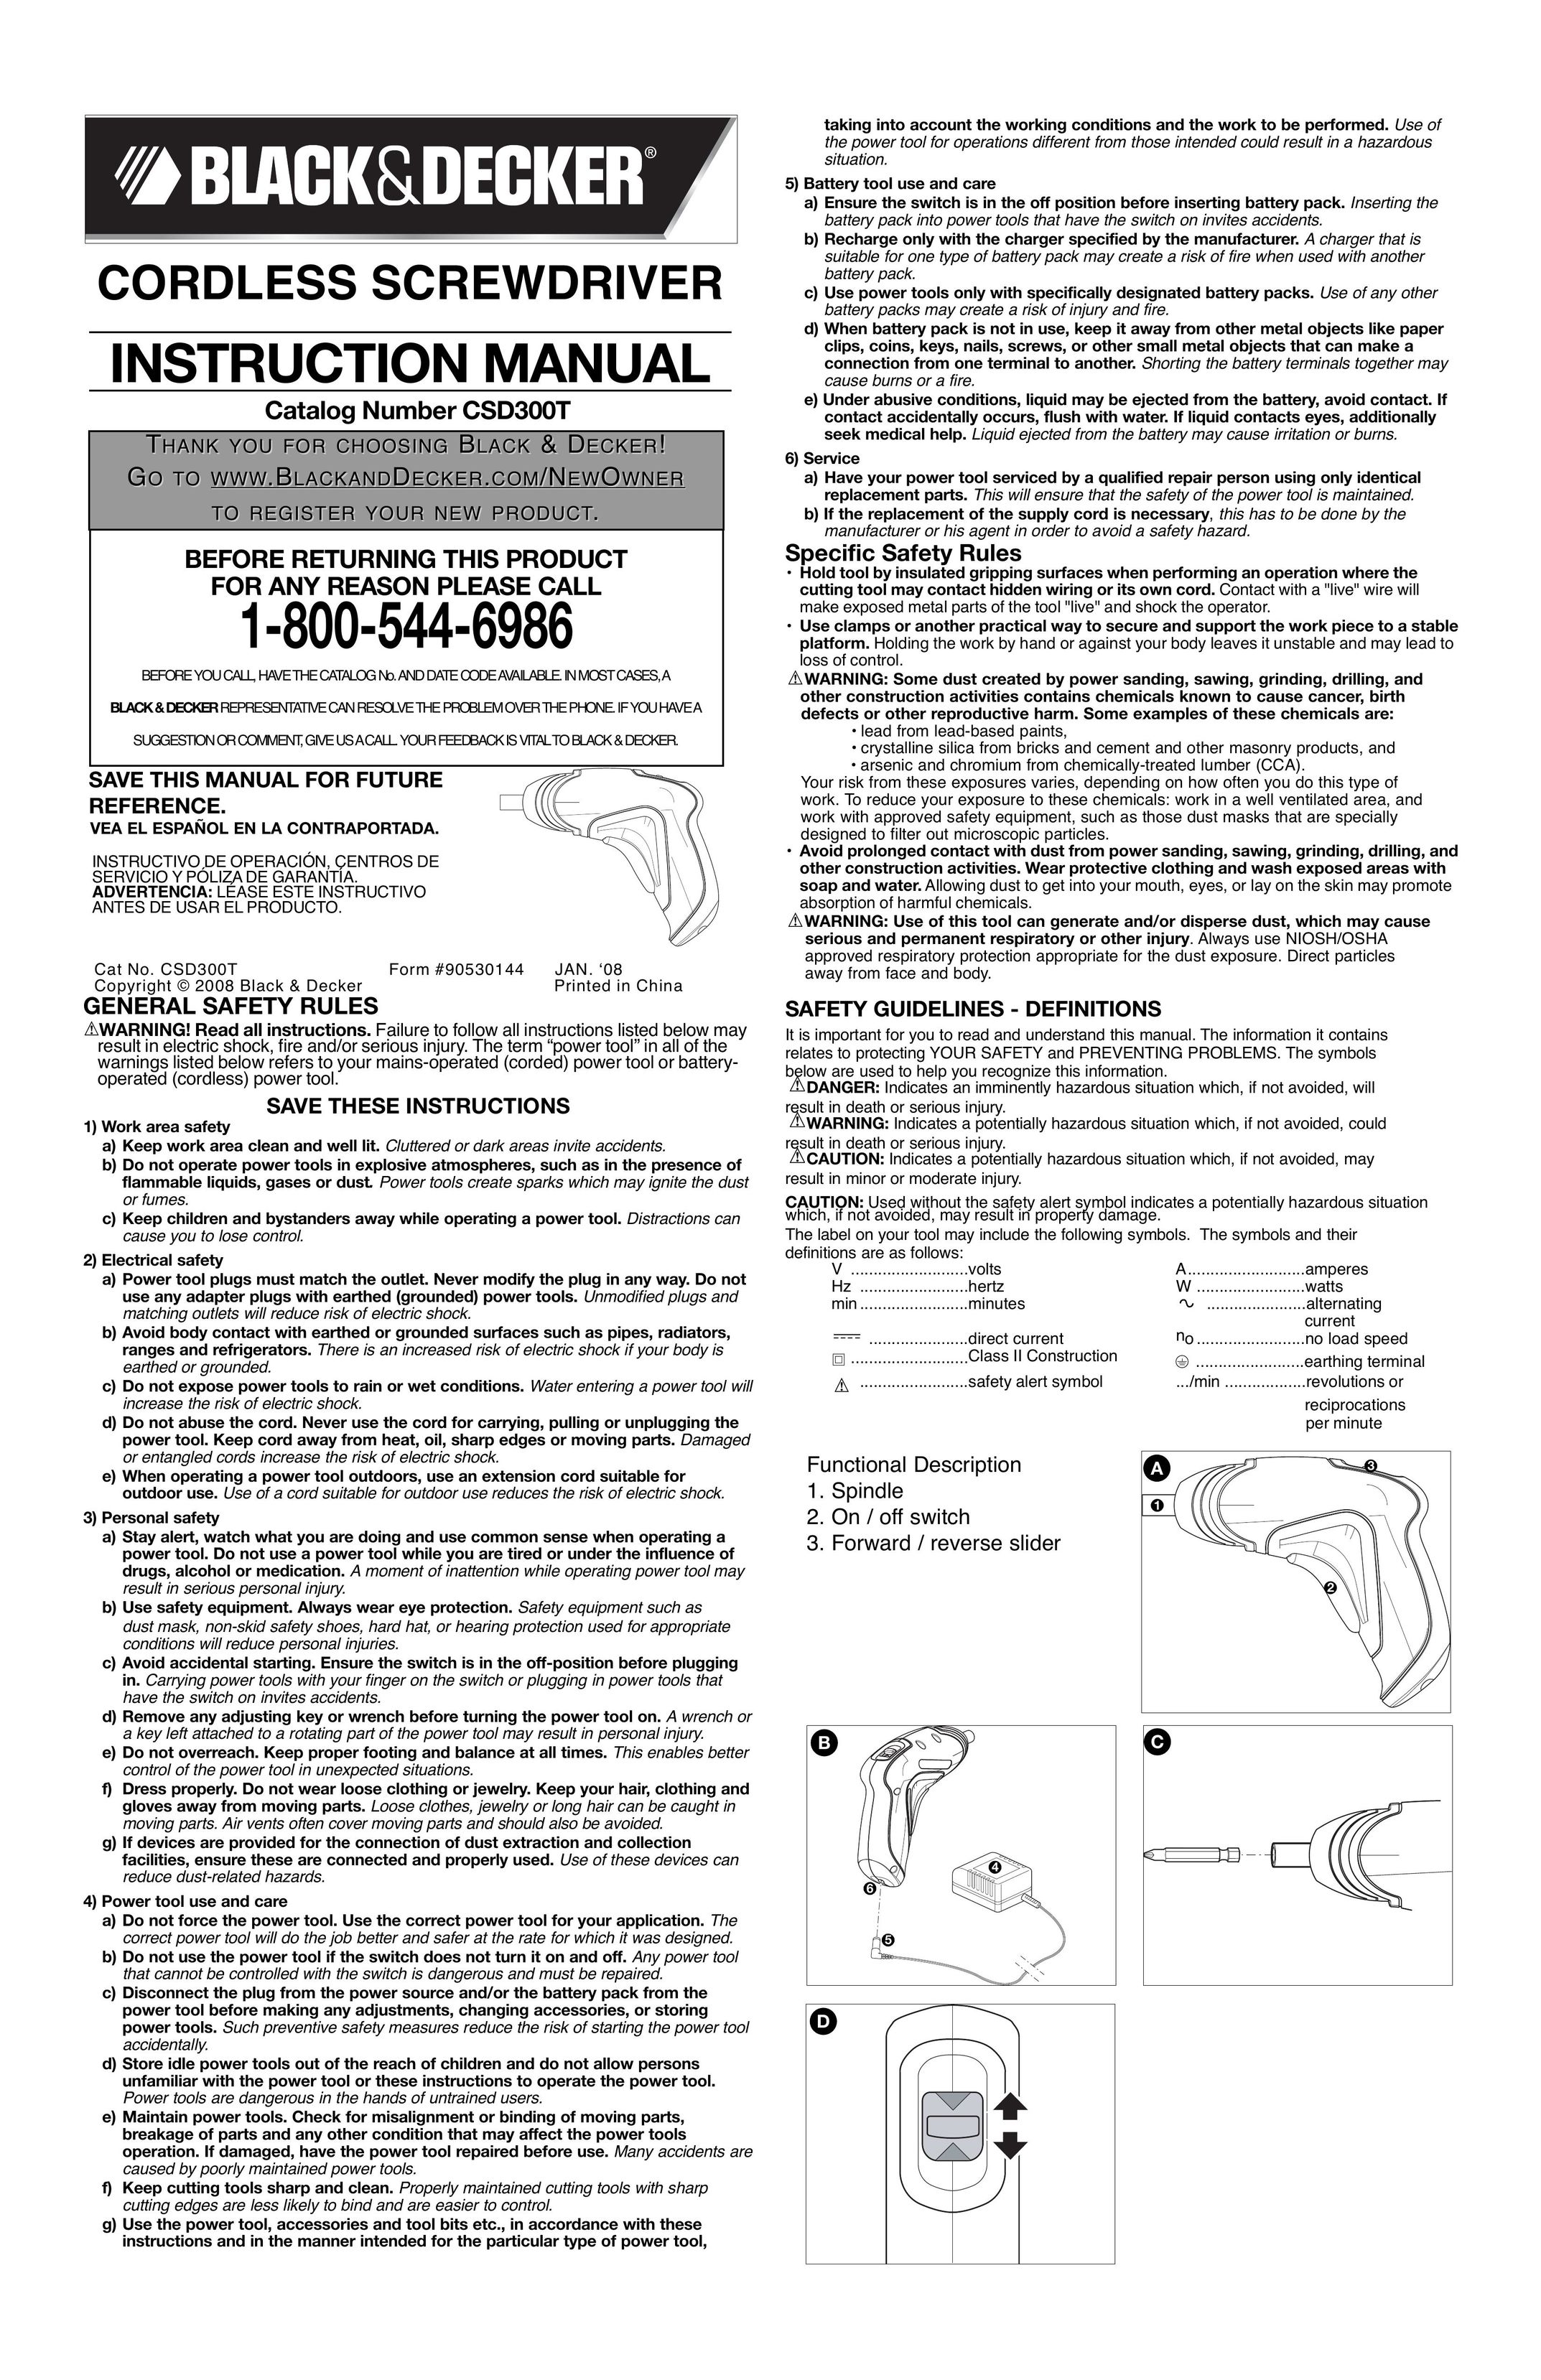 Black & Decker 90530144 Power Screwdriver User Manual